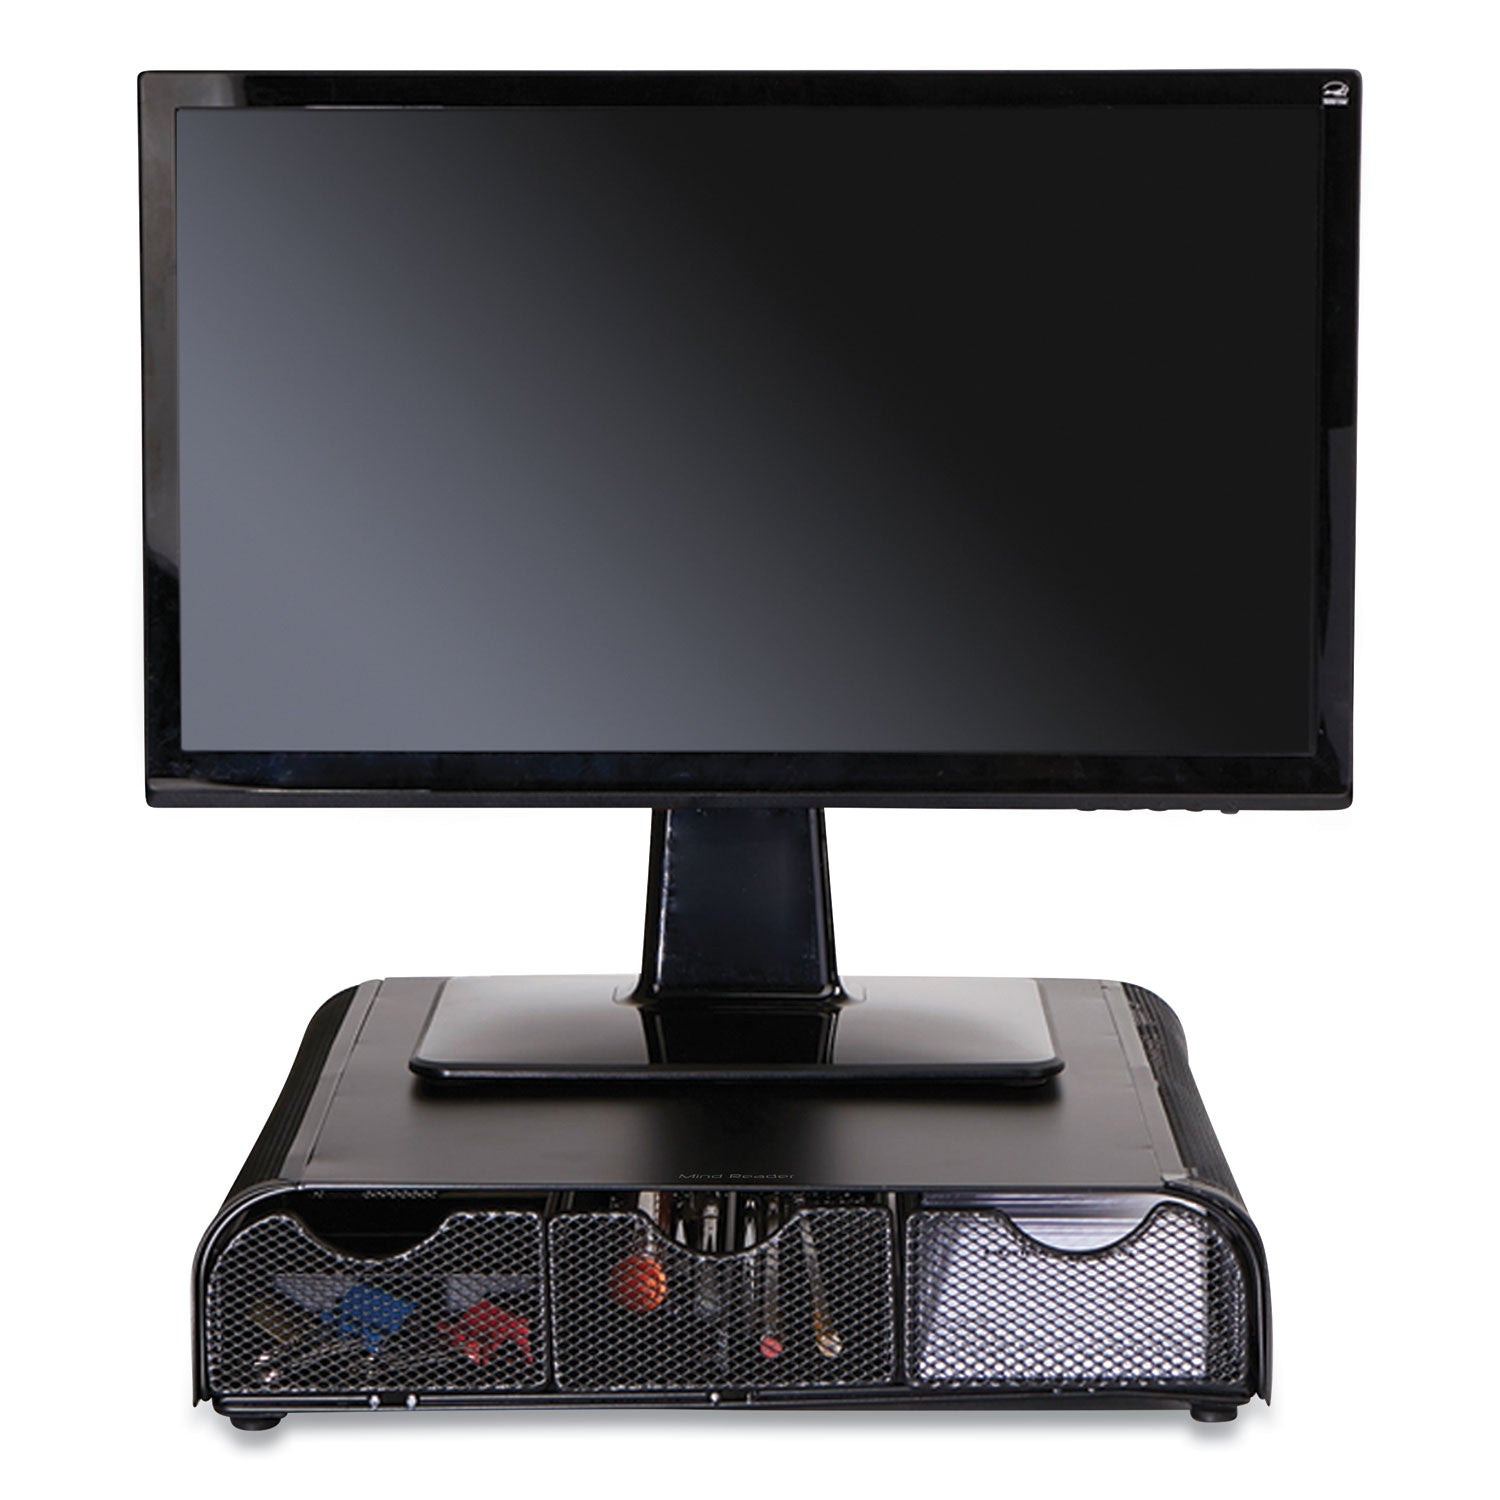 perch-monitor-stand-and-desk-organizer-13-x-125-x-3-black_emsmonmeshblk - 4